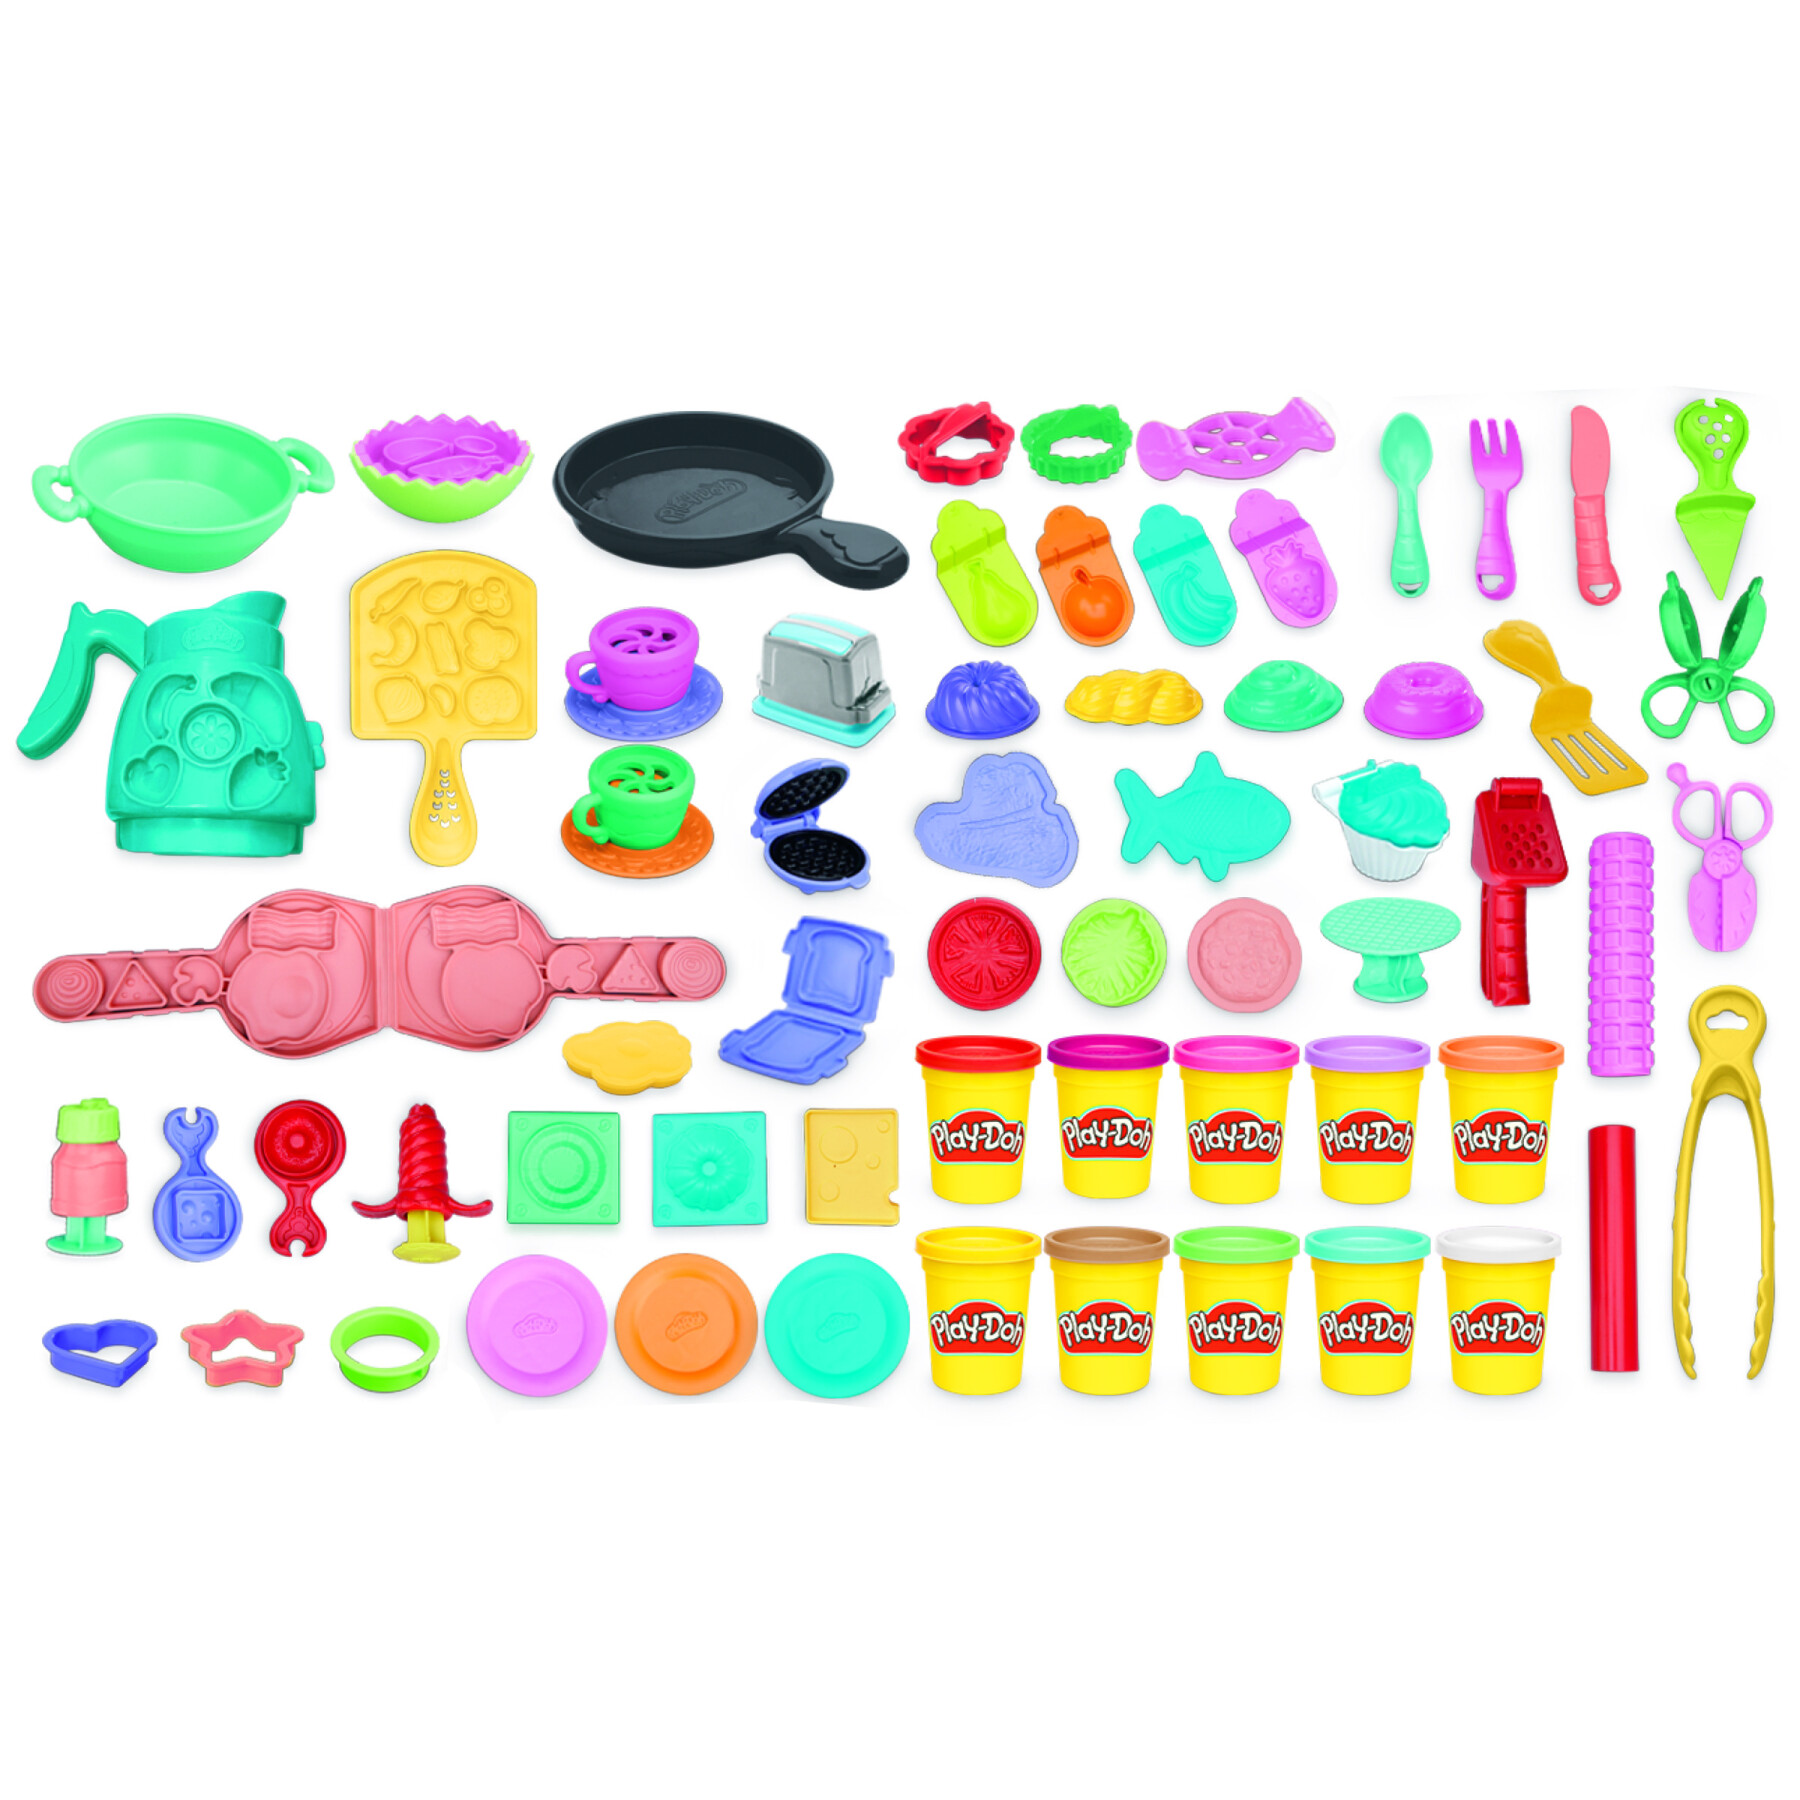 Play-doh, brunch set, playset cucina con set di accessori - PLAY-DOH